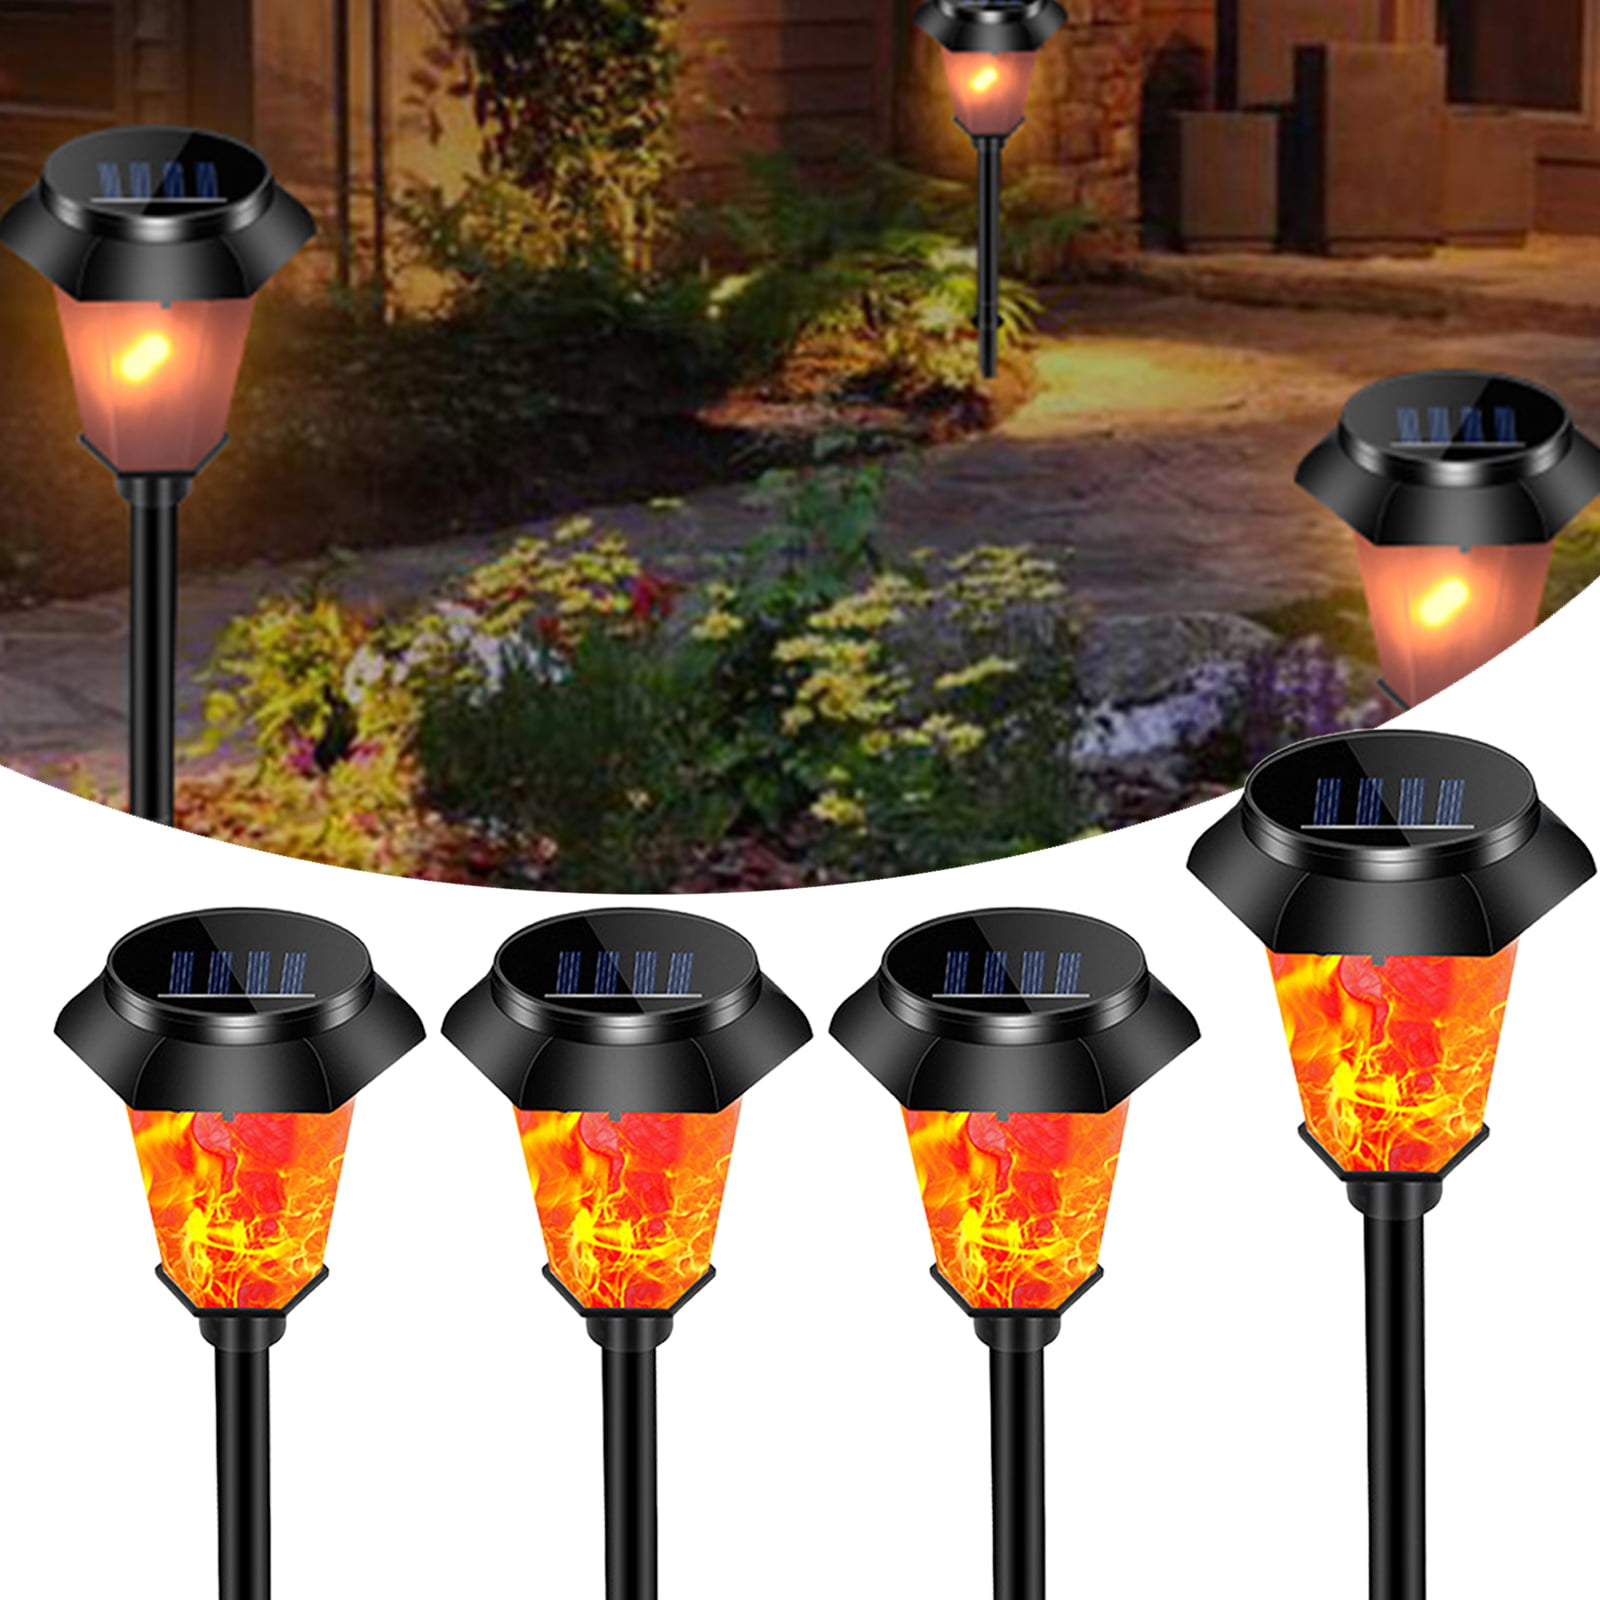 4x Solar Dancing Flame 36 LED Torch Stake Flickering Outdoor Garden Lights Beige 